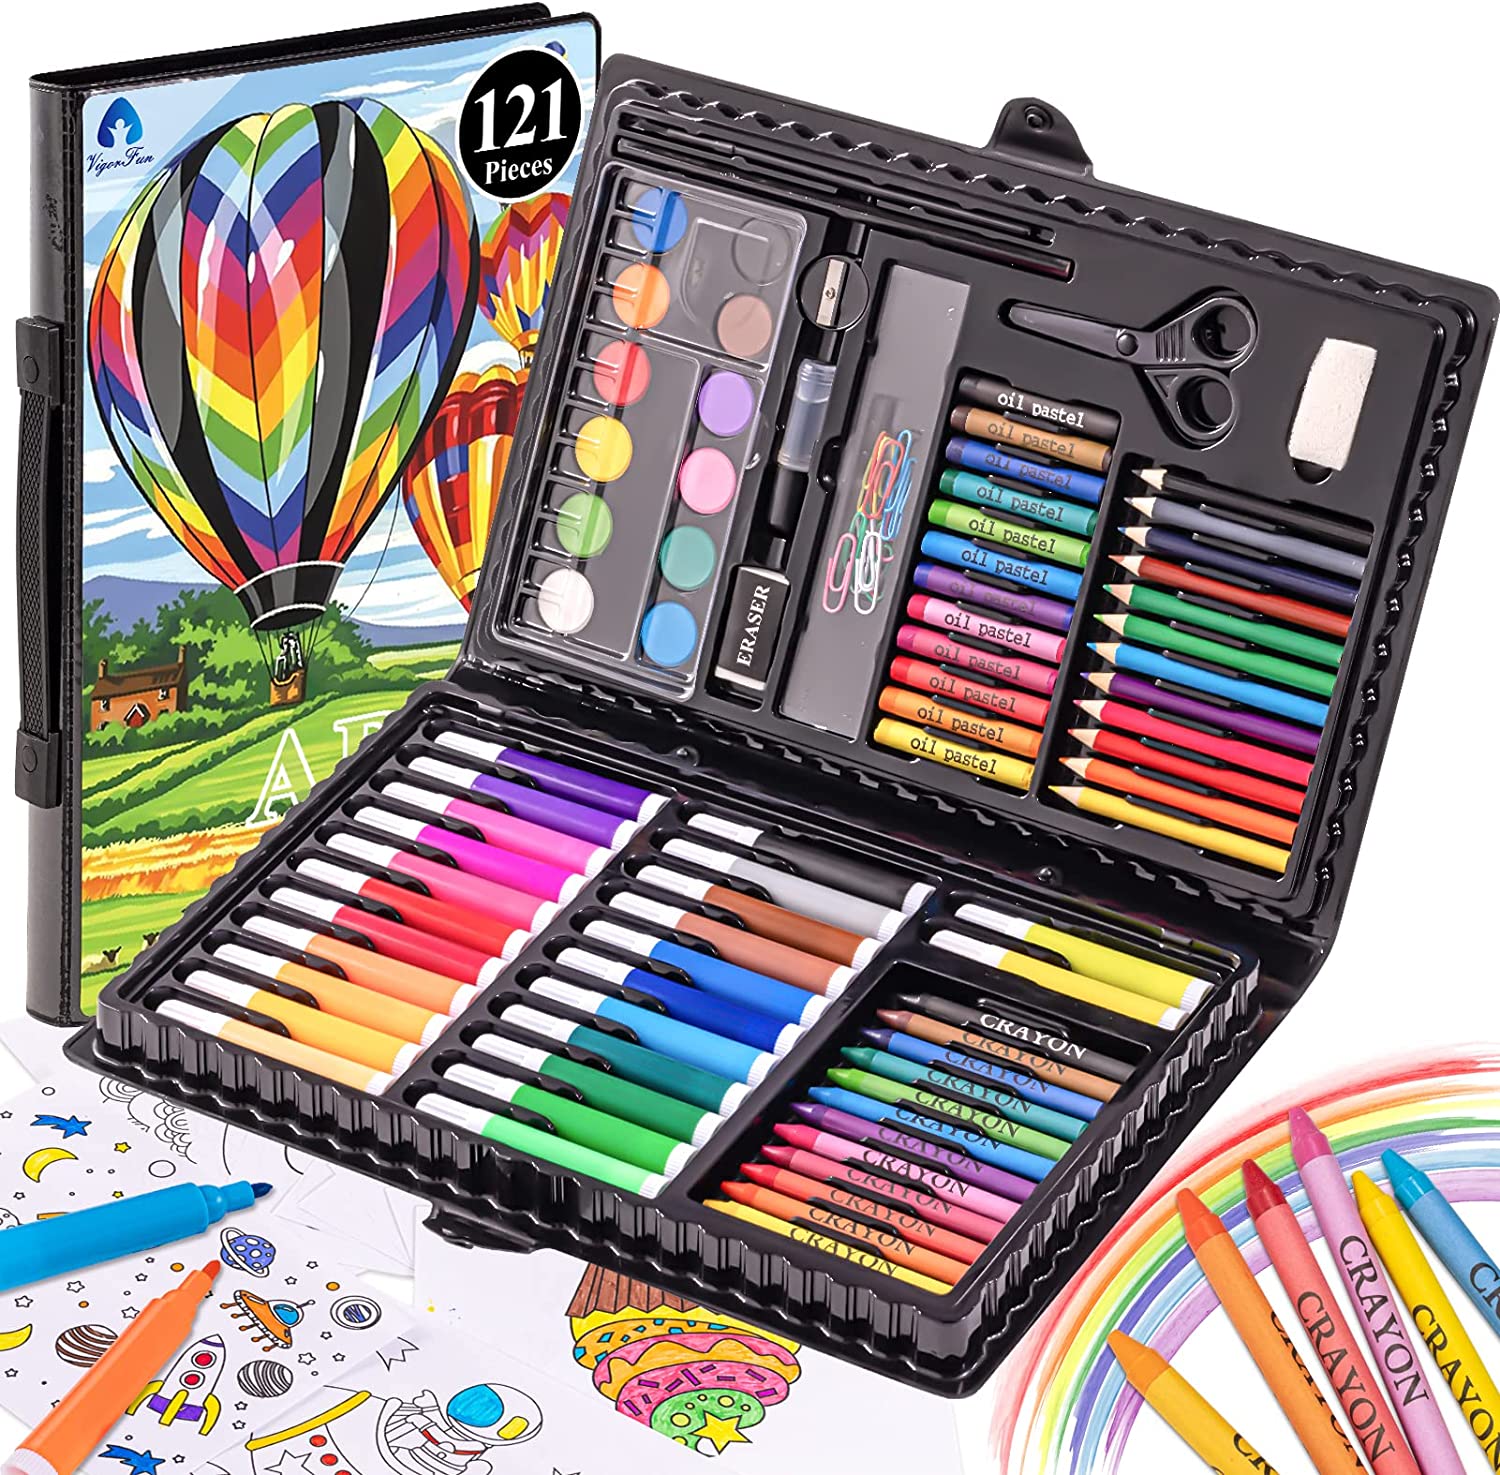 Art Kit, iBayam 222 Pack Drawing Kits Art Supplies for Kids Girls